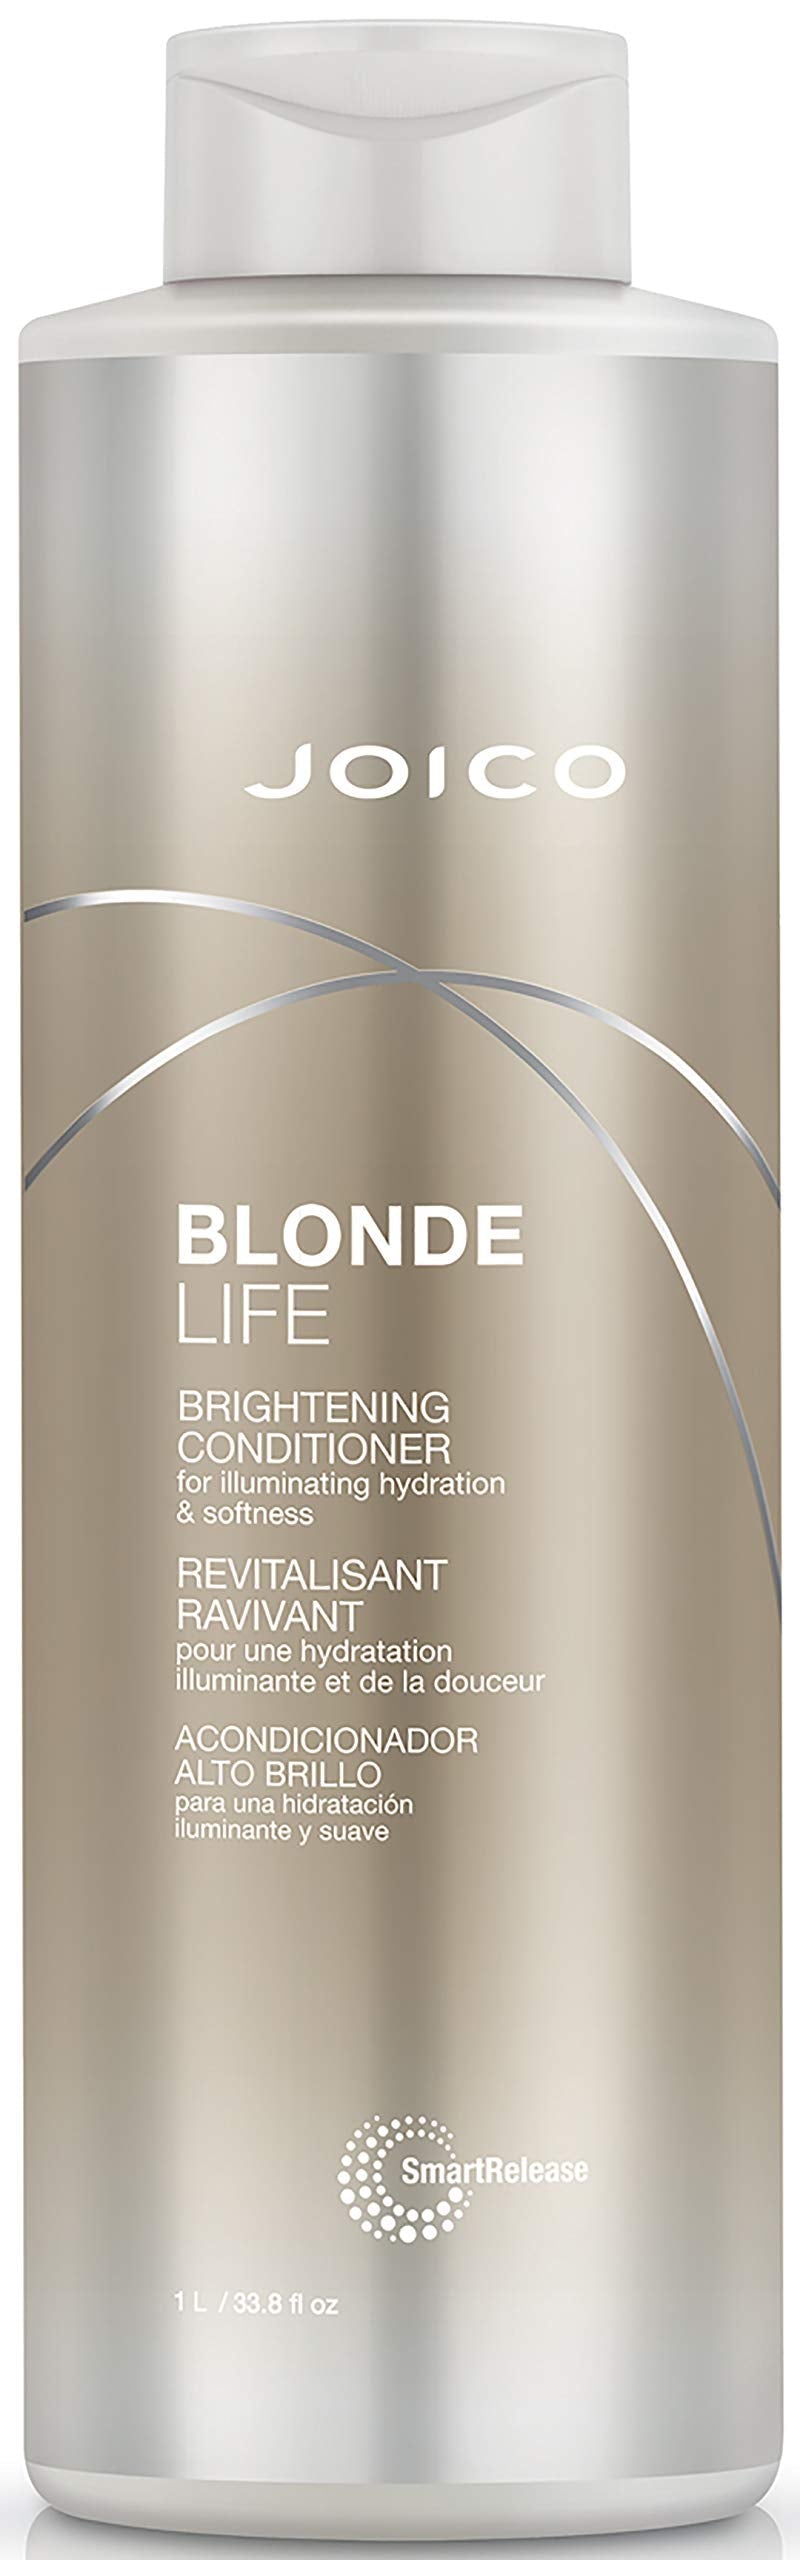 [Australia] - Joico Blonde Life Brightening Conditioner, 1000 ml 